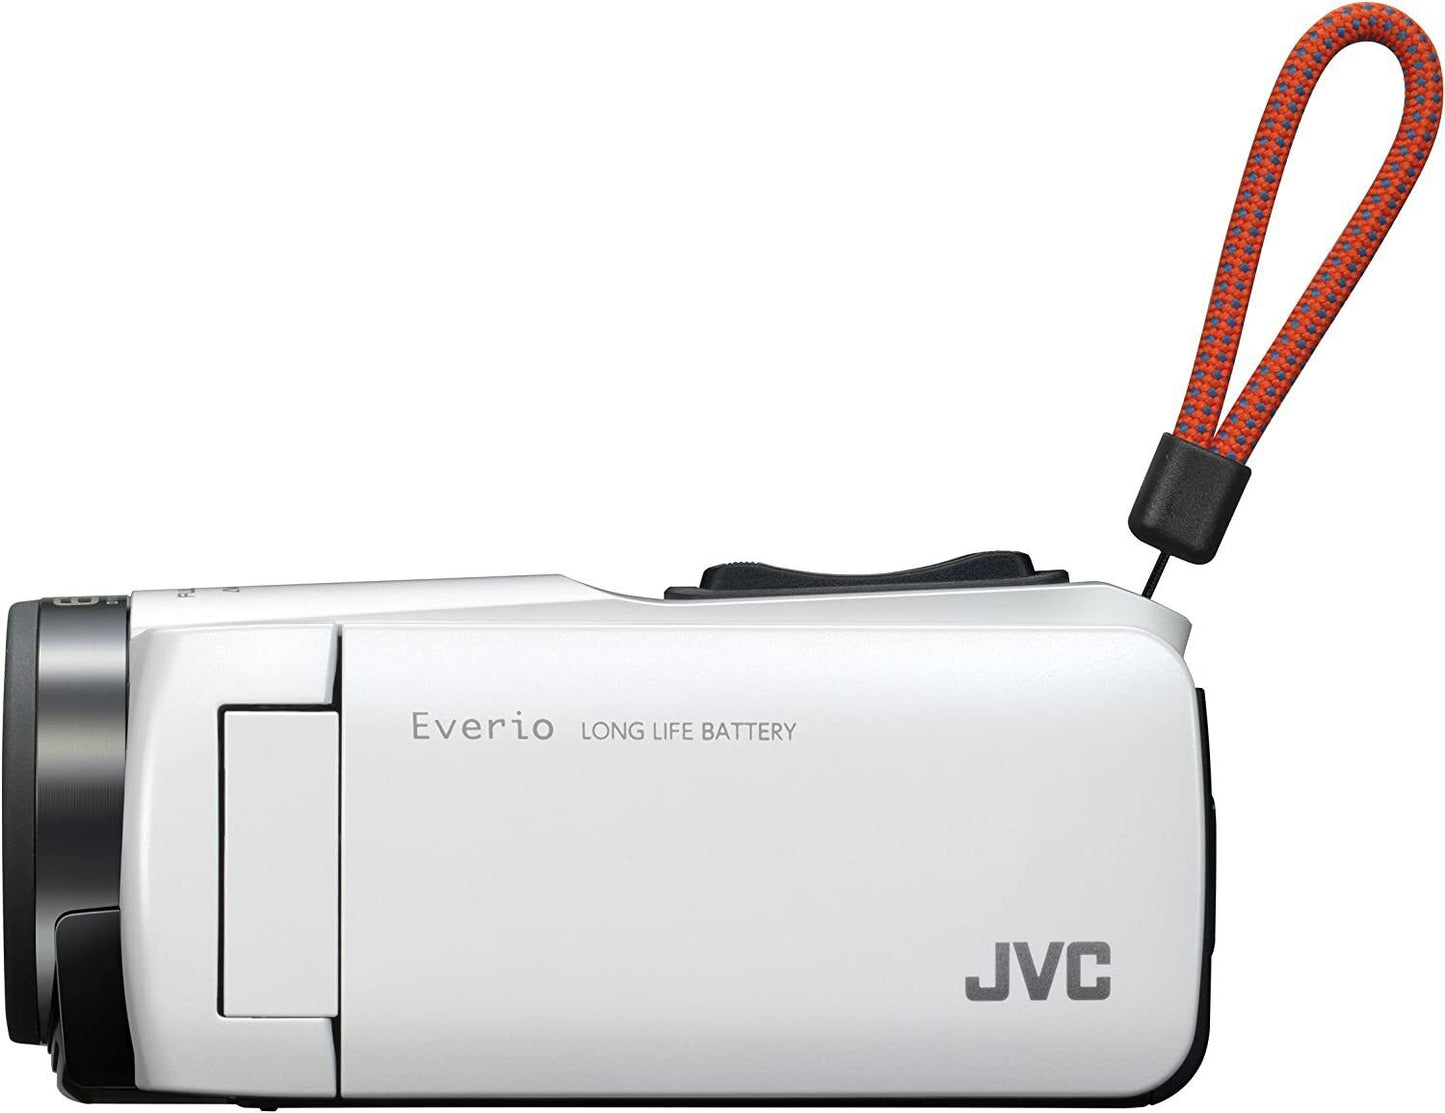 GZ-F270 JVC Video Camera Everio Shock & Low temperature Resistance 32GB White